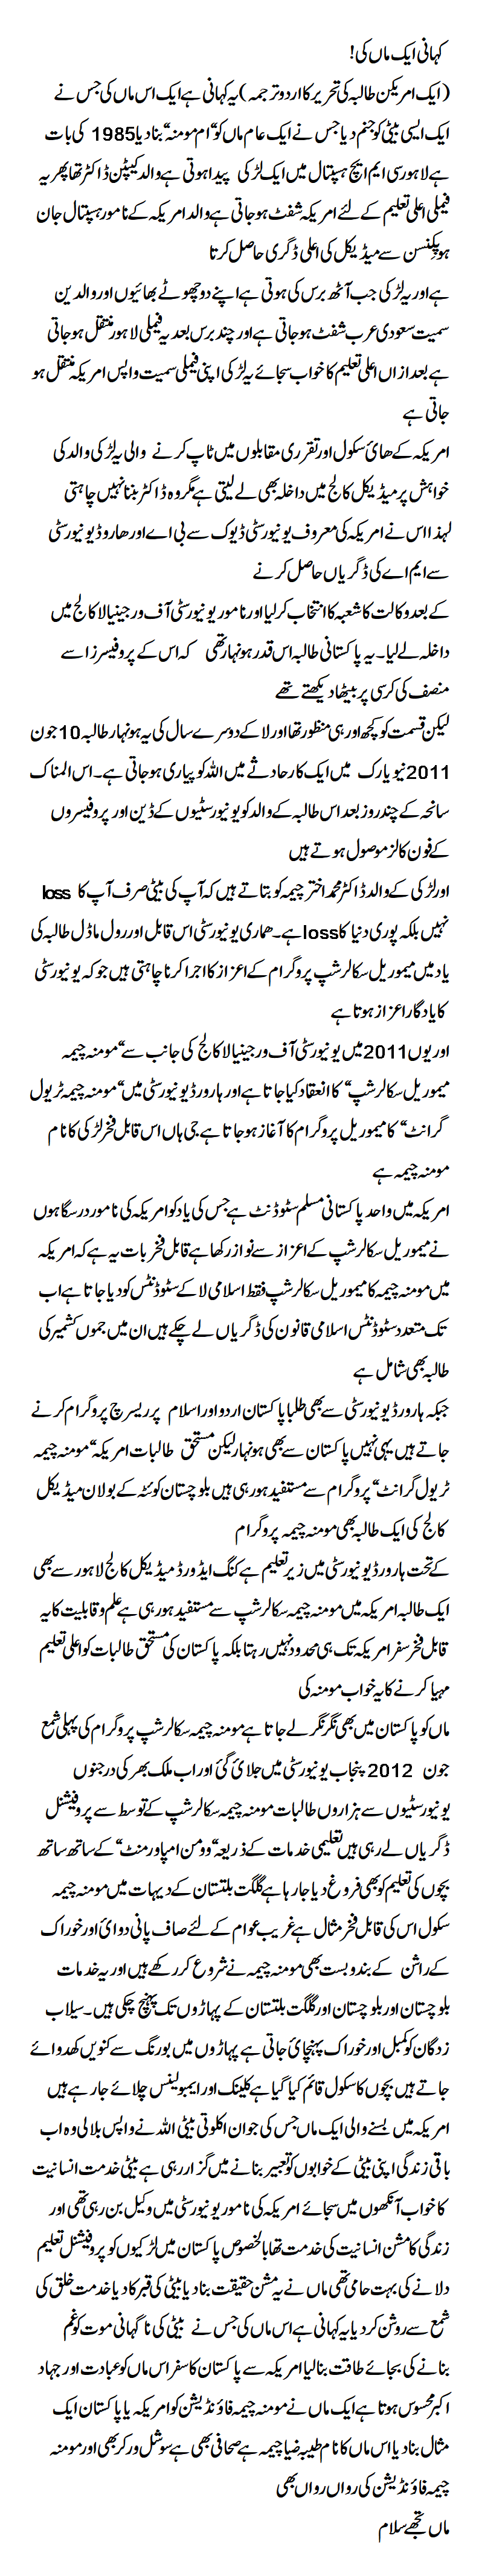 Urdu translation of an American students writing